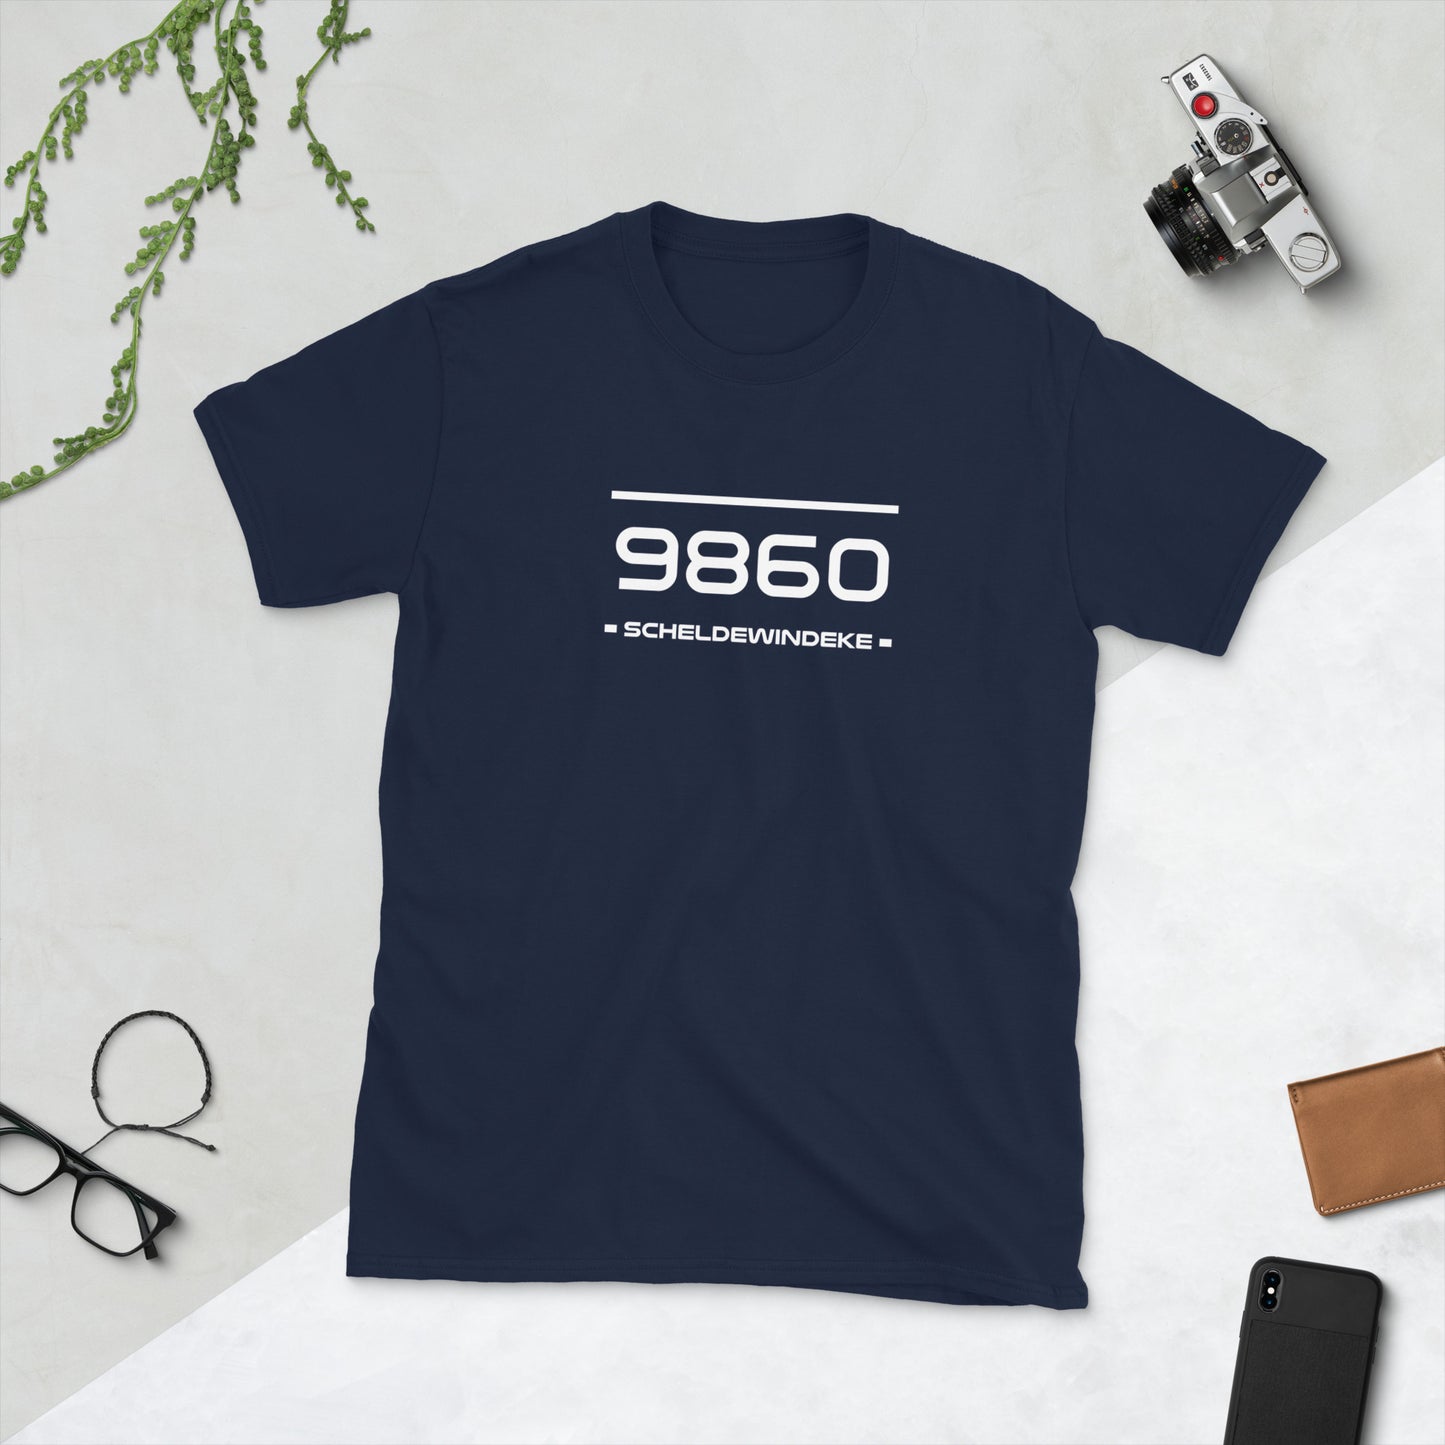 Tshirt - 9860 - Scheldewindeke